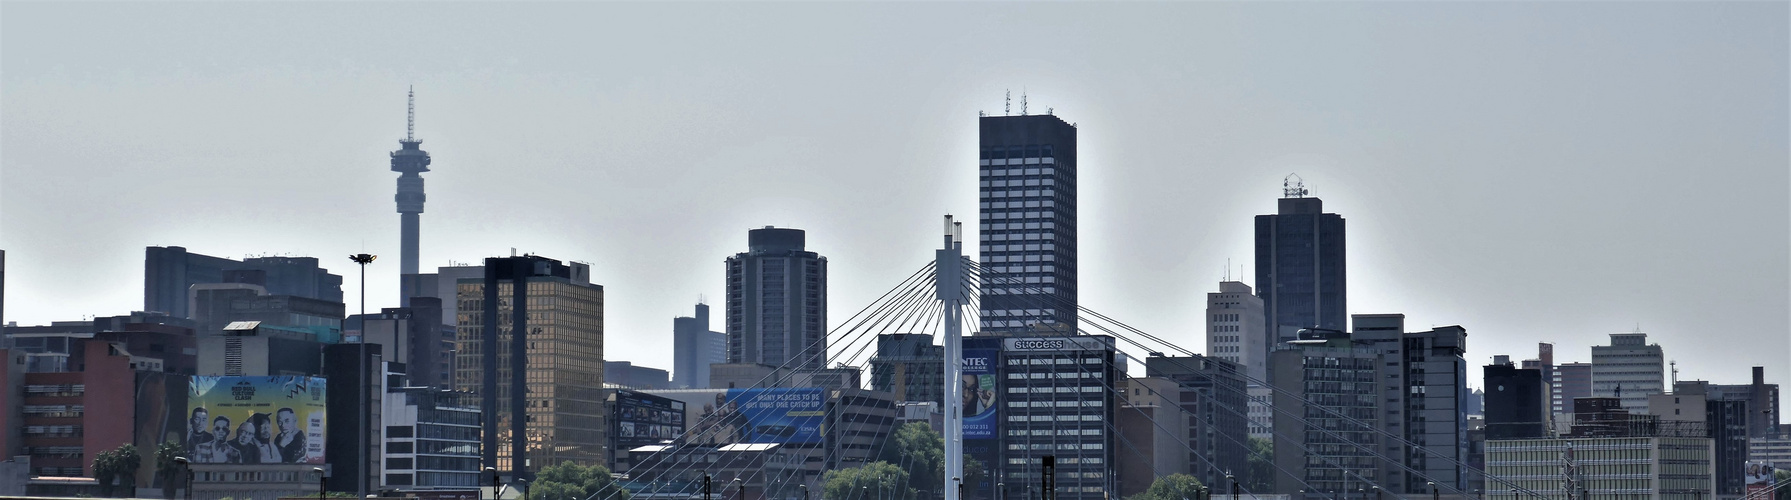 Johannesburg: Skyline